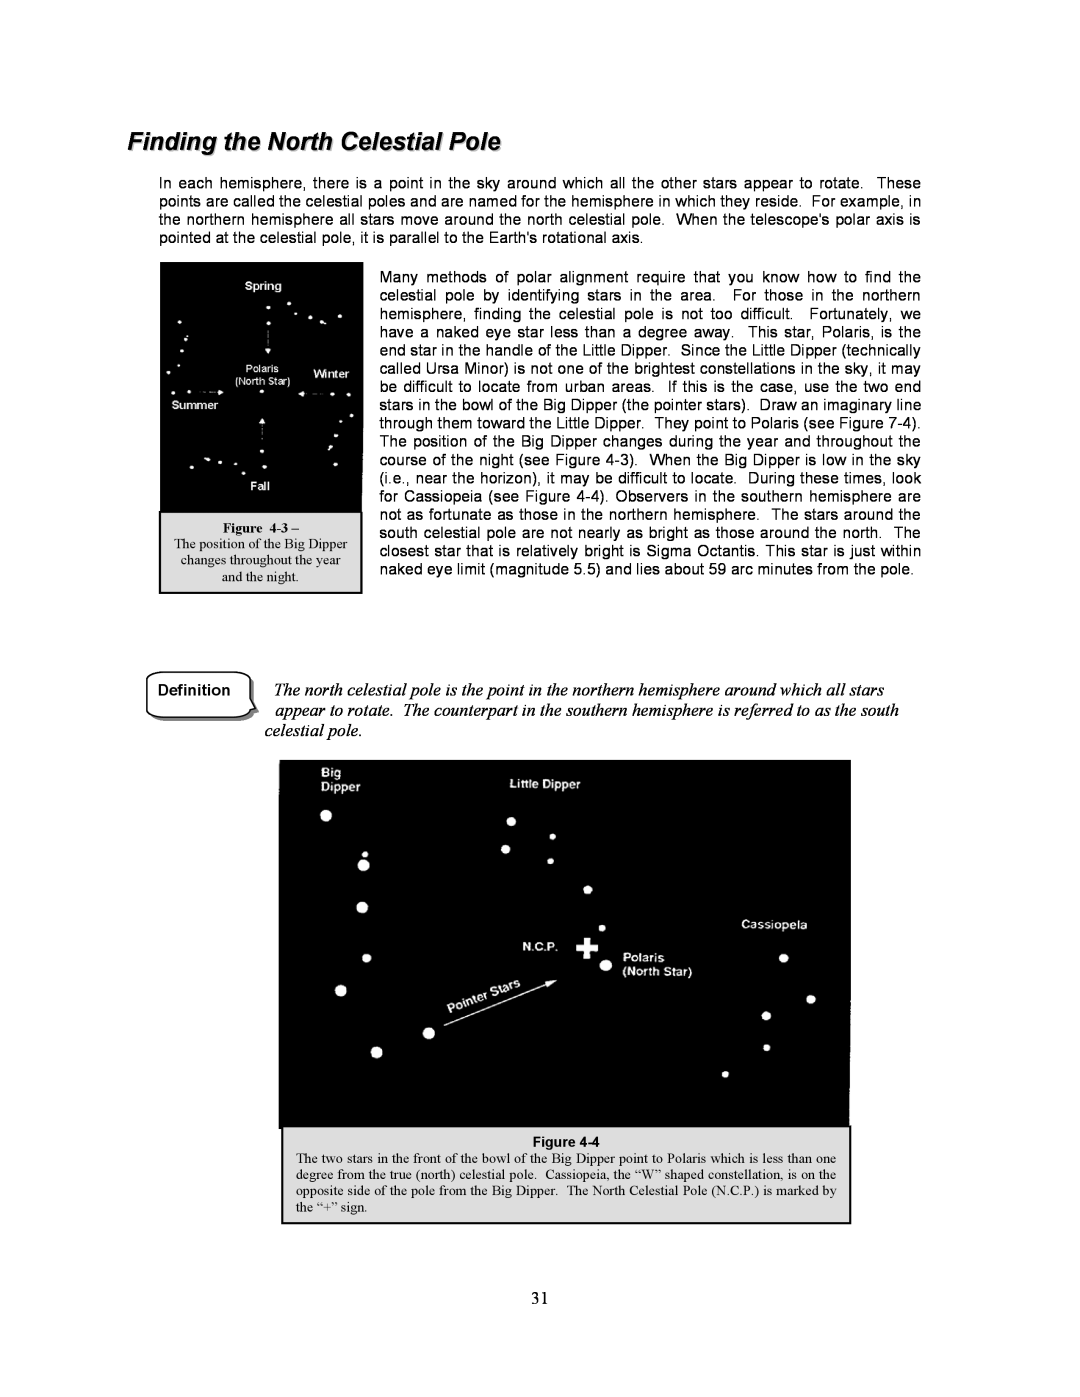 Celestron 8i manual Finding the North Celestial Pole, celestial pole 